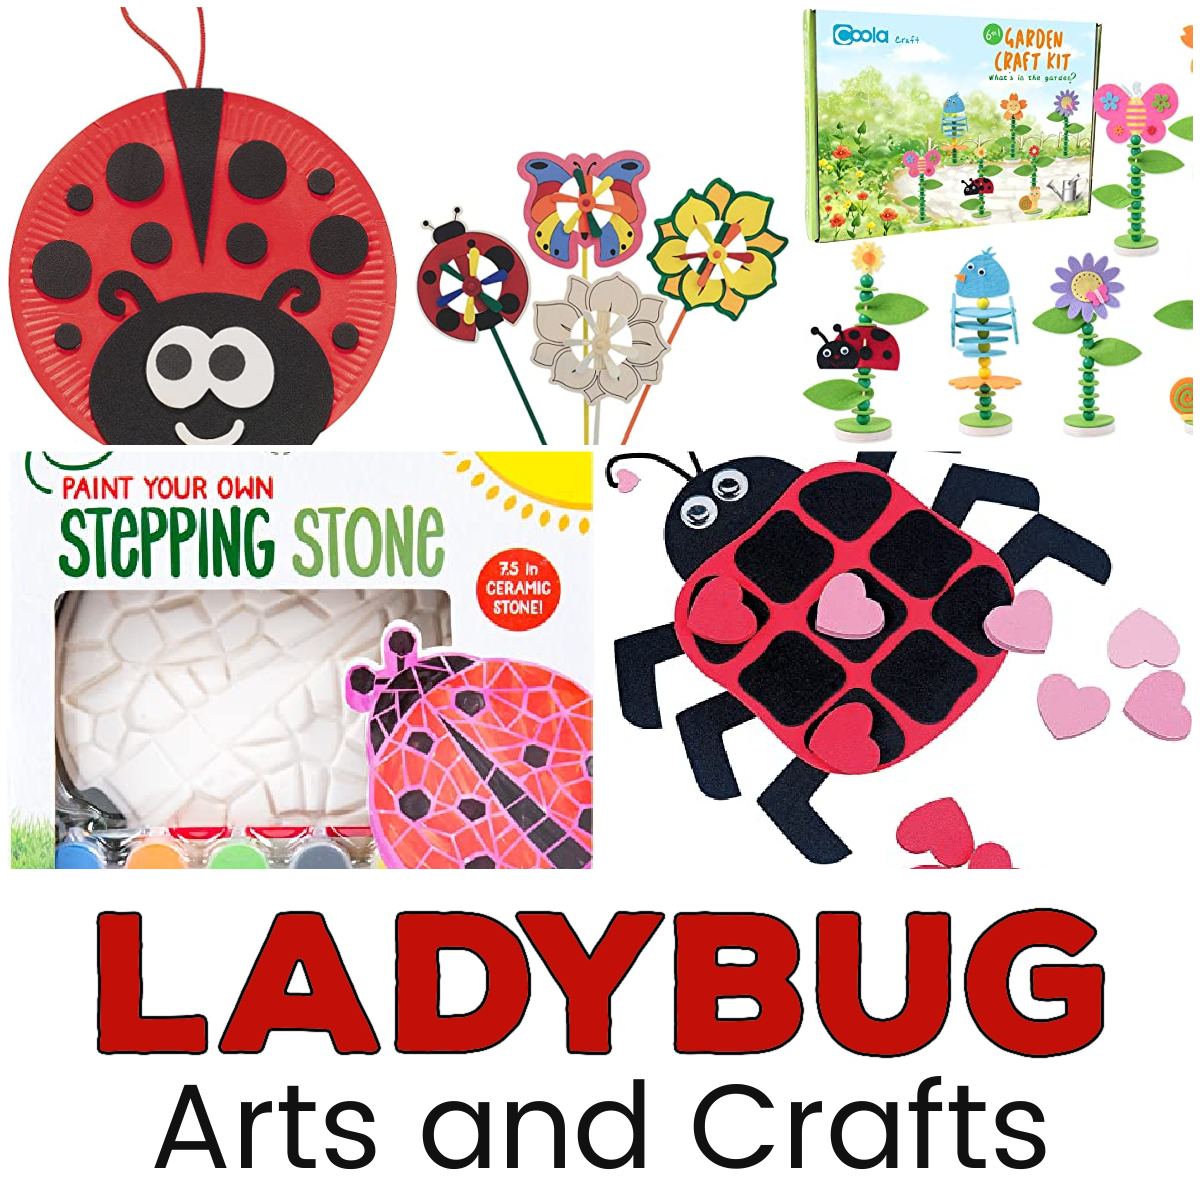 Ladybug Arts and Crafts